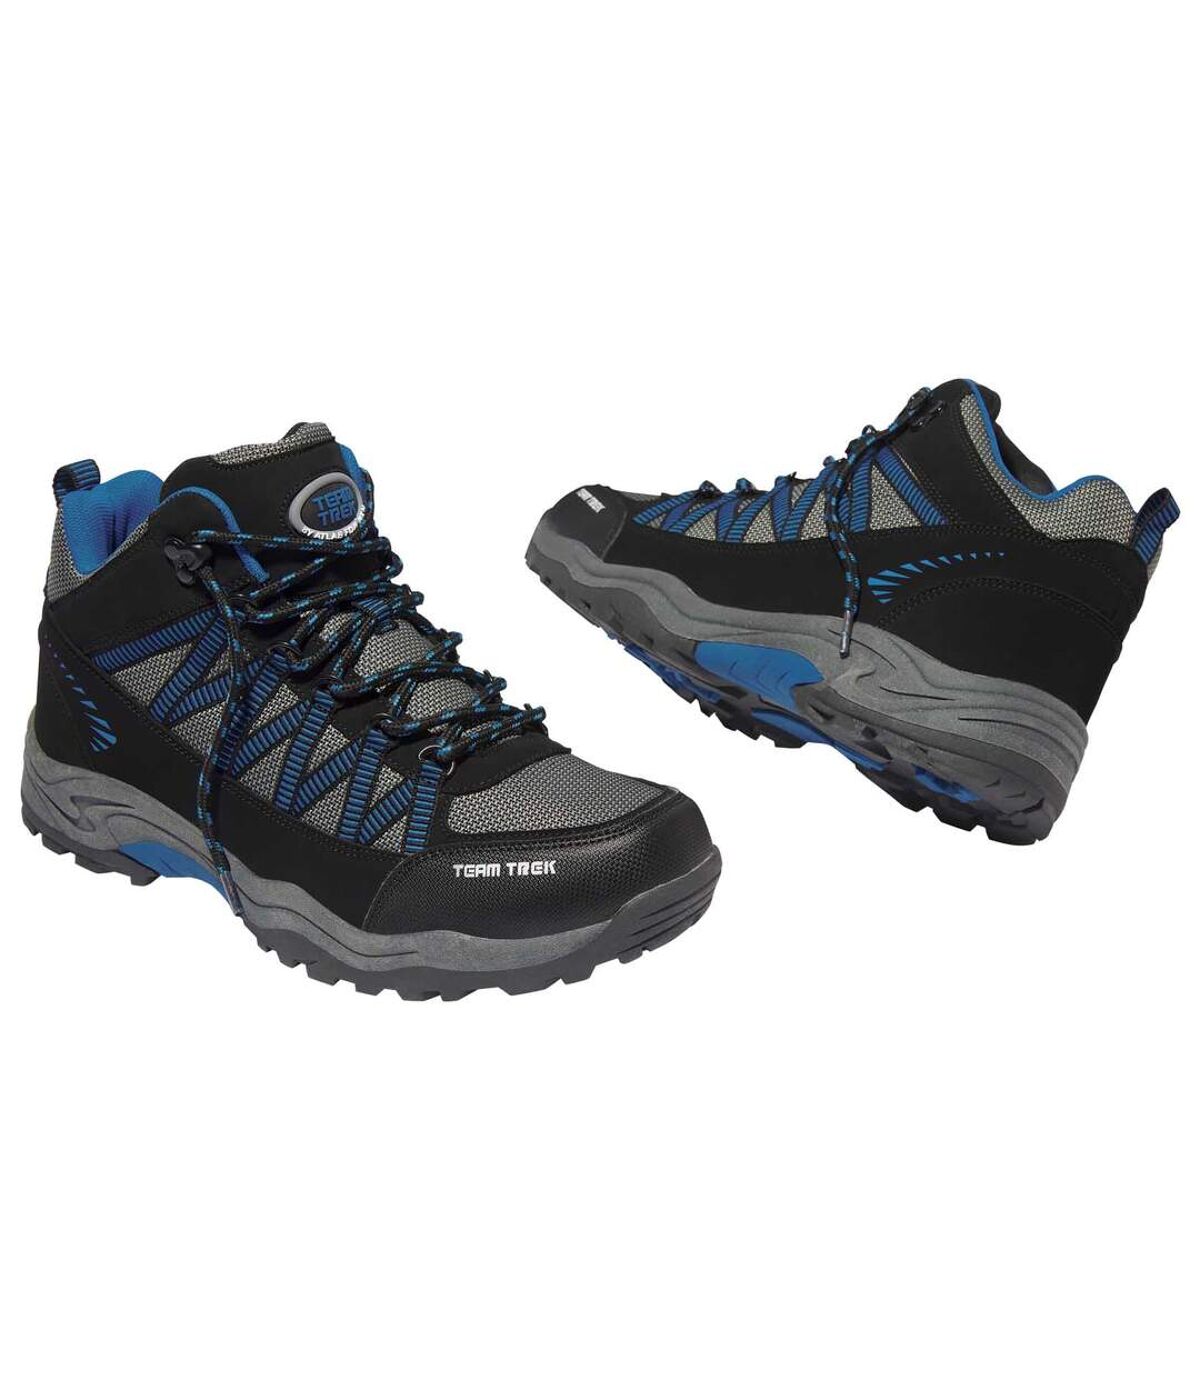 Men's Black and Grey All-Terrain Hiking Boots Atlas For Men